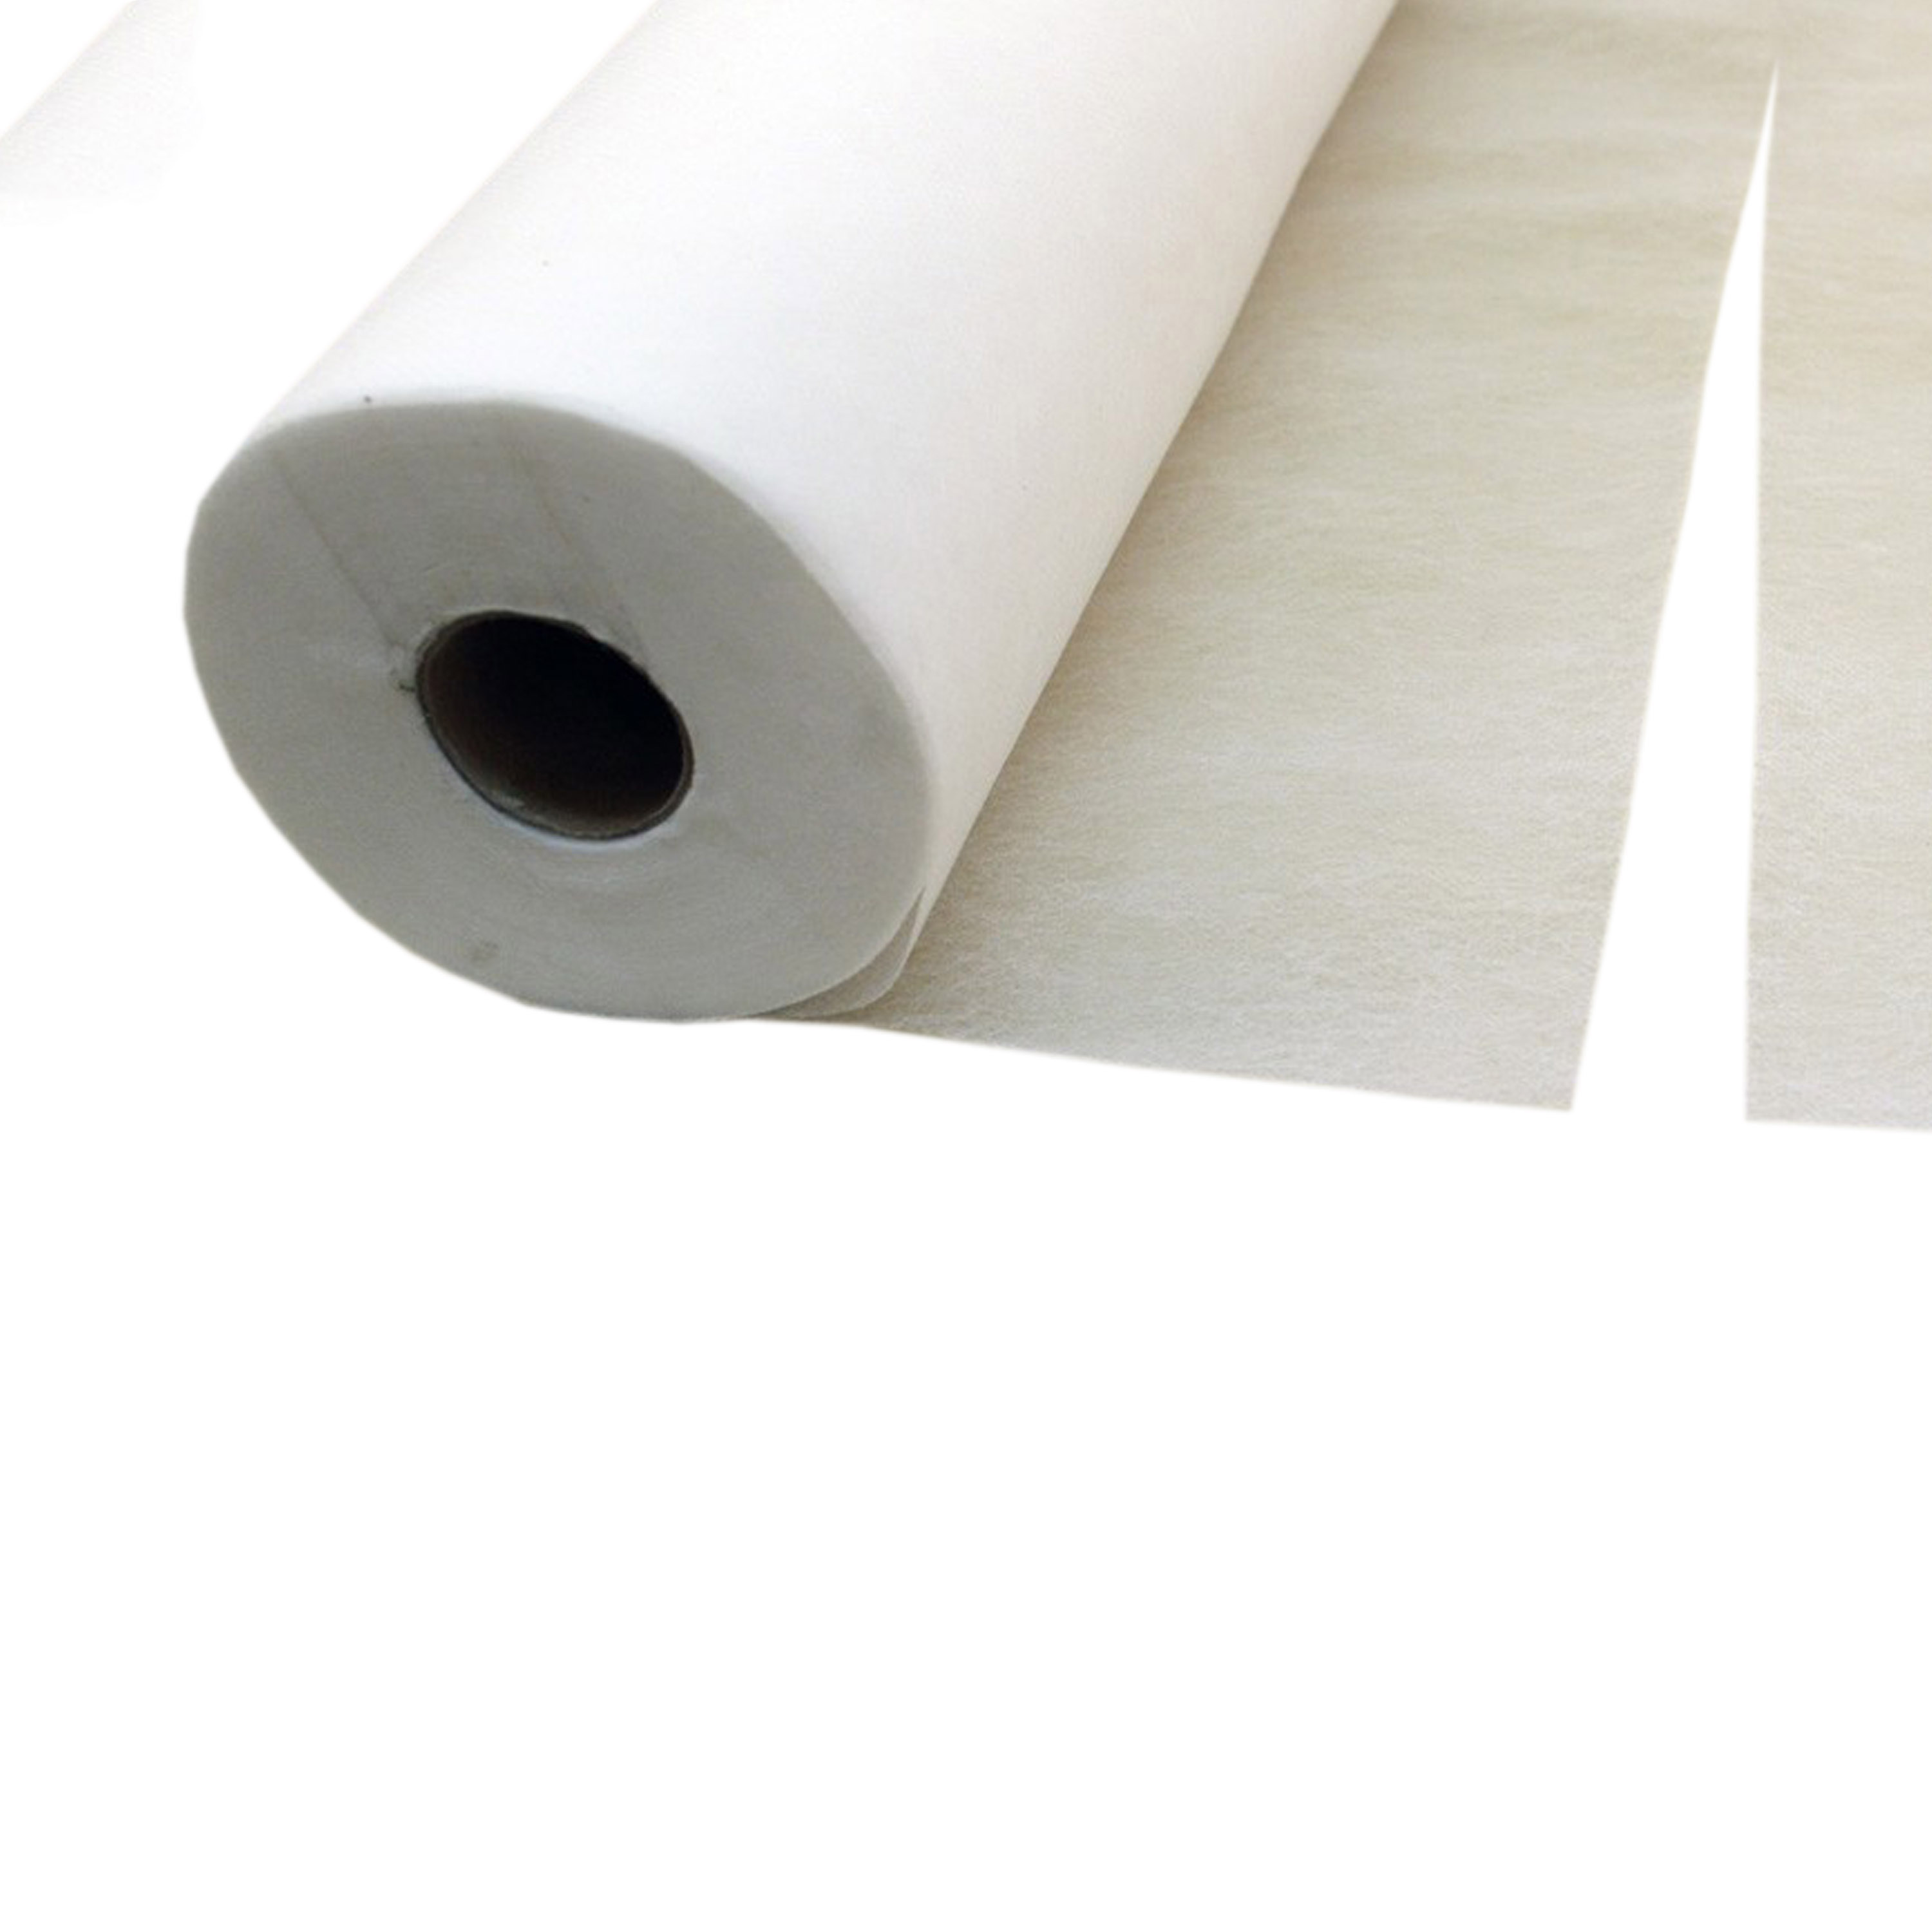 Sábana absorbente de papel crepé de 2 capas